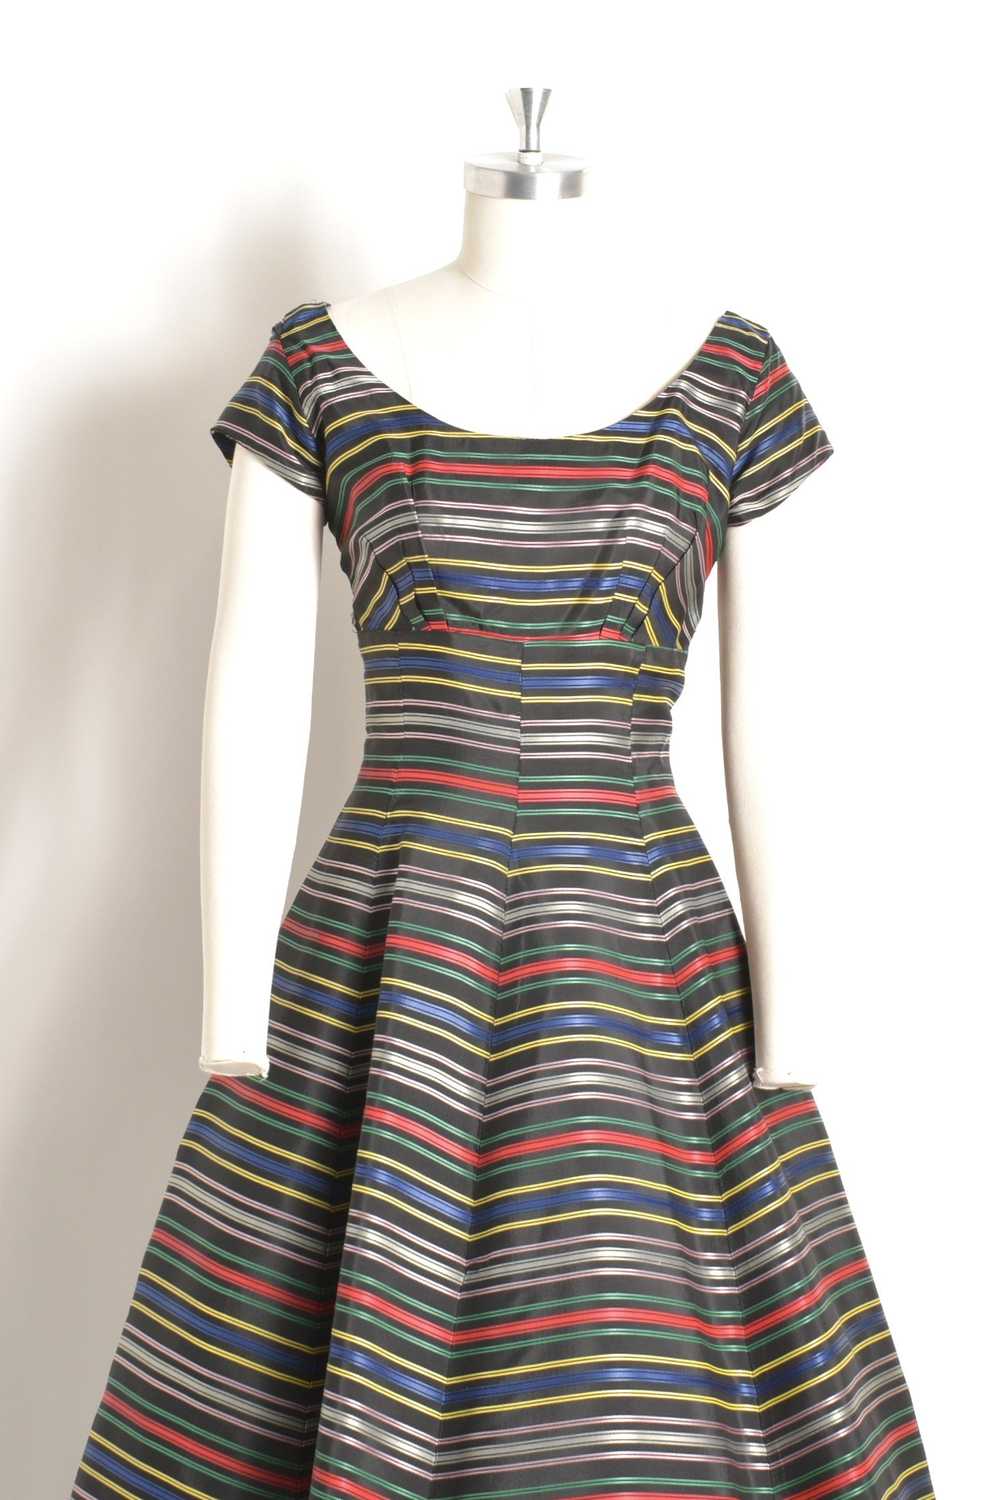 1980s Pleated Chiffon Ribbon Dress-medium - image 12